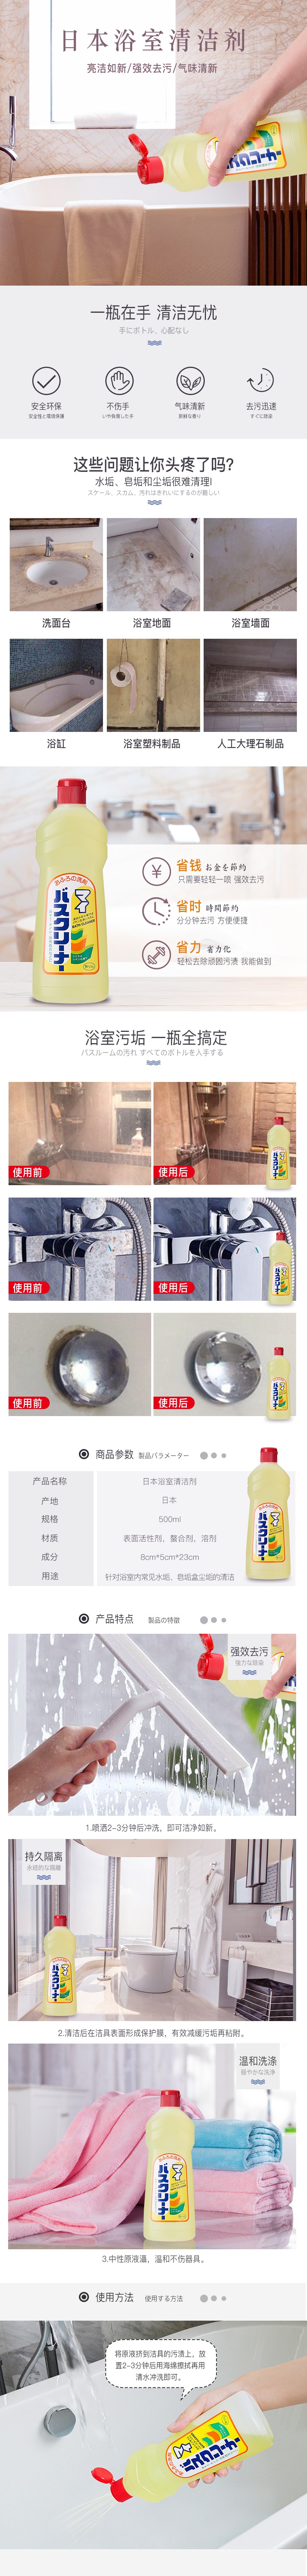 ROCKET日本浴室清洁剂500ml详情图1